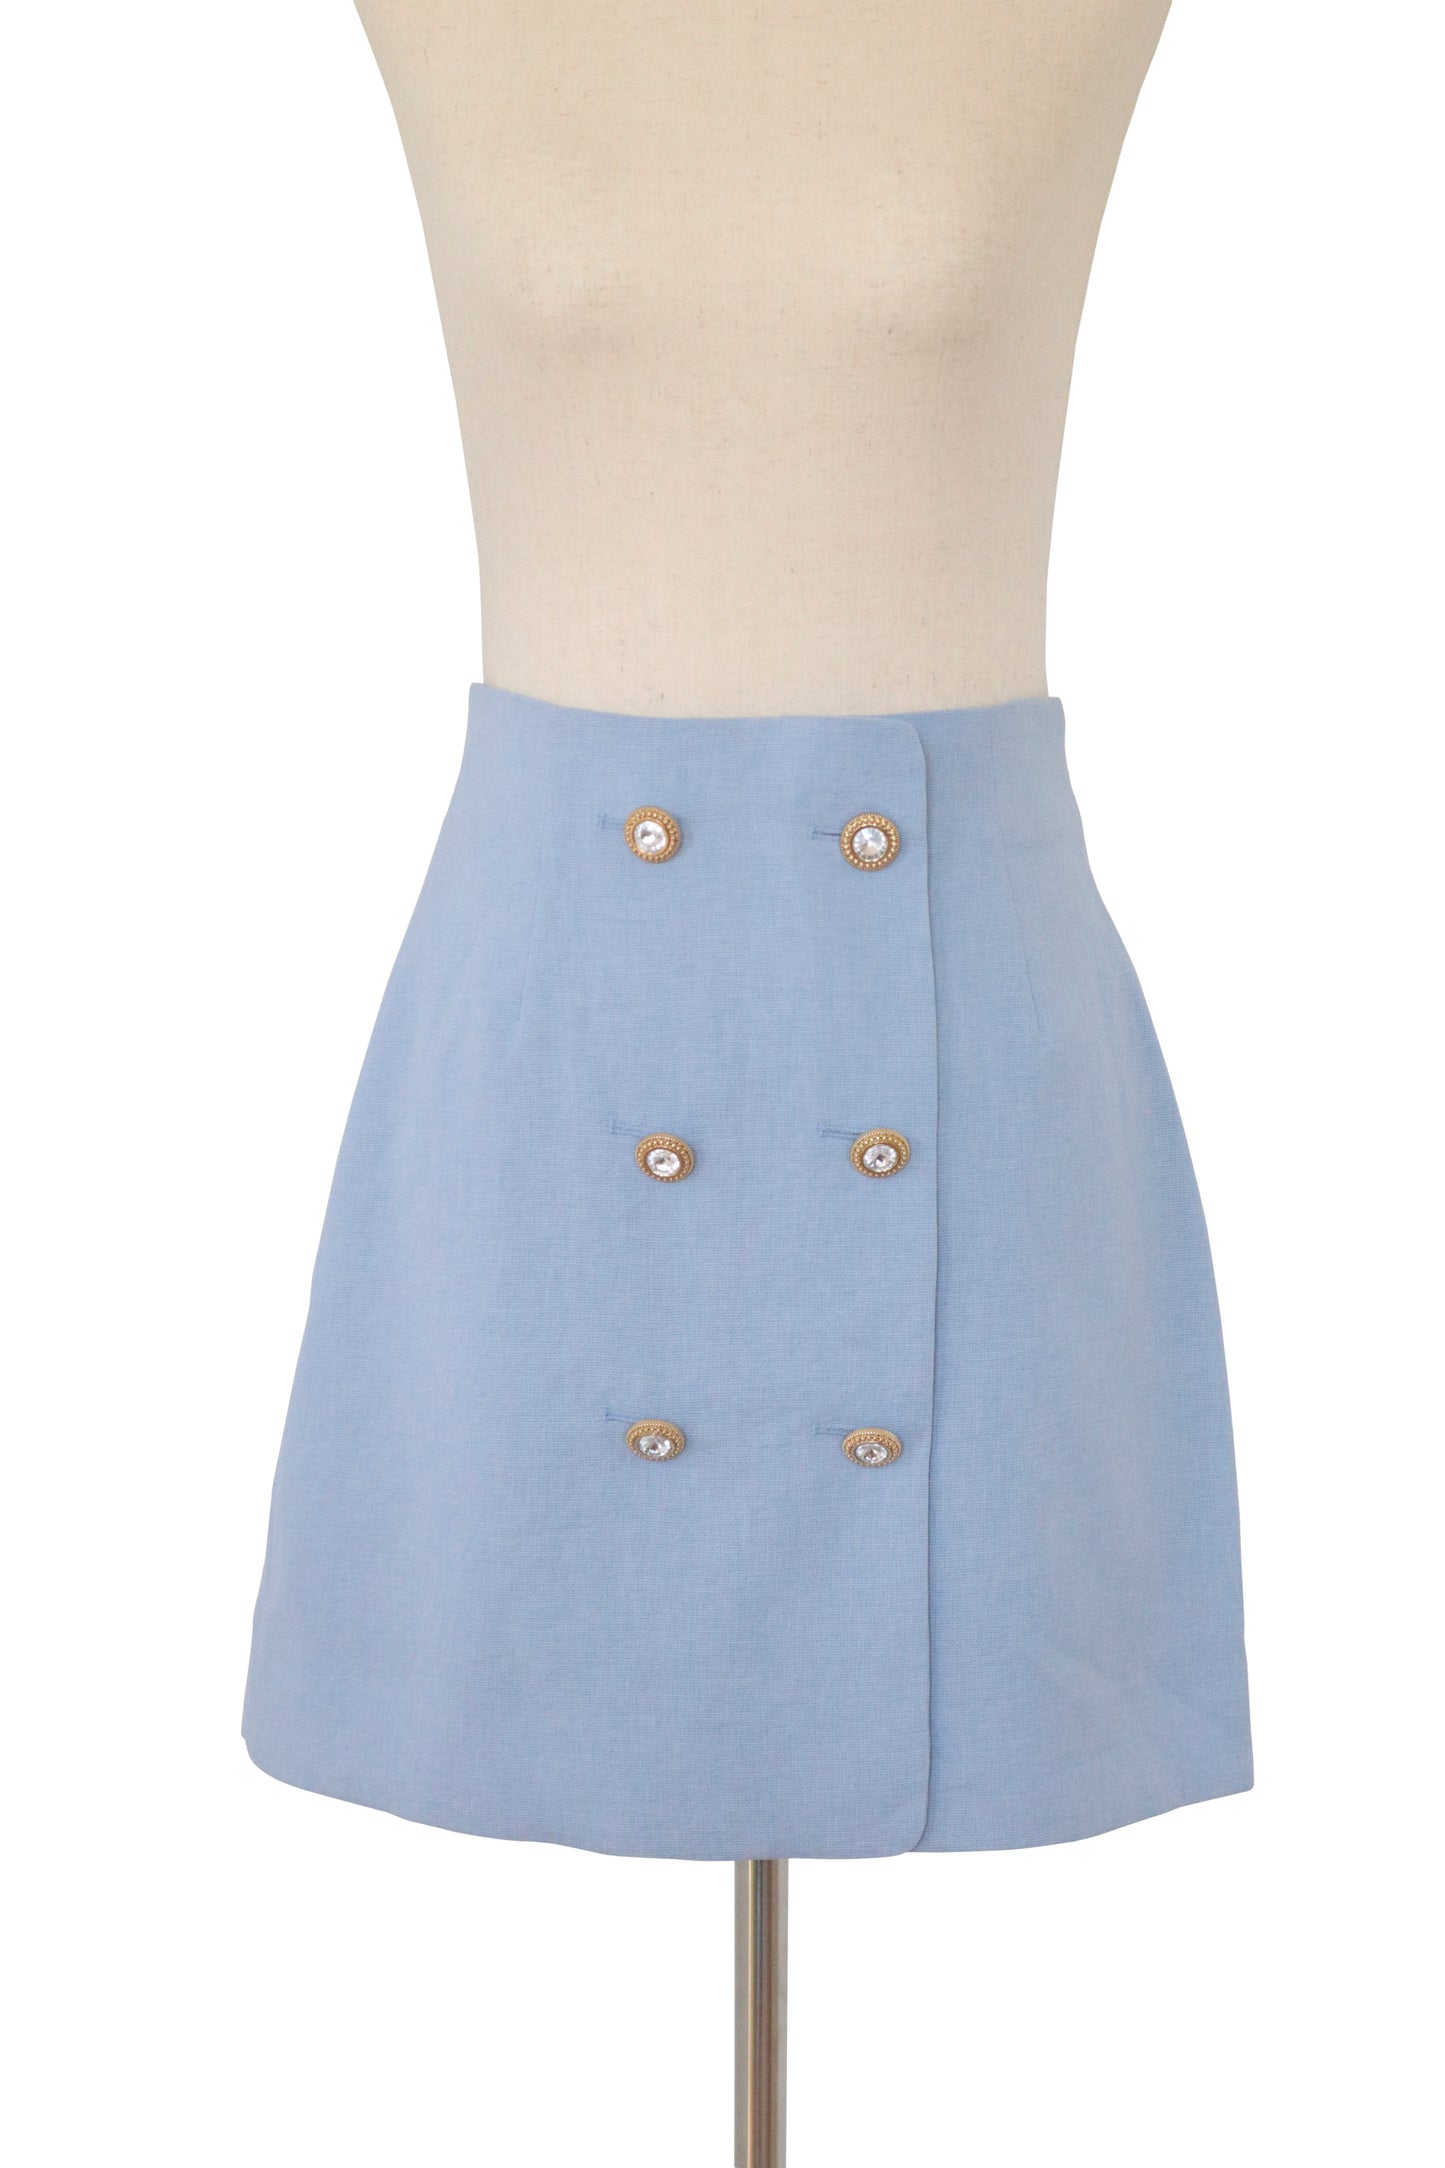 ALICE MCCALL - Light Blue Skirt W/ TAGS - US 4